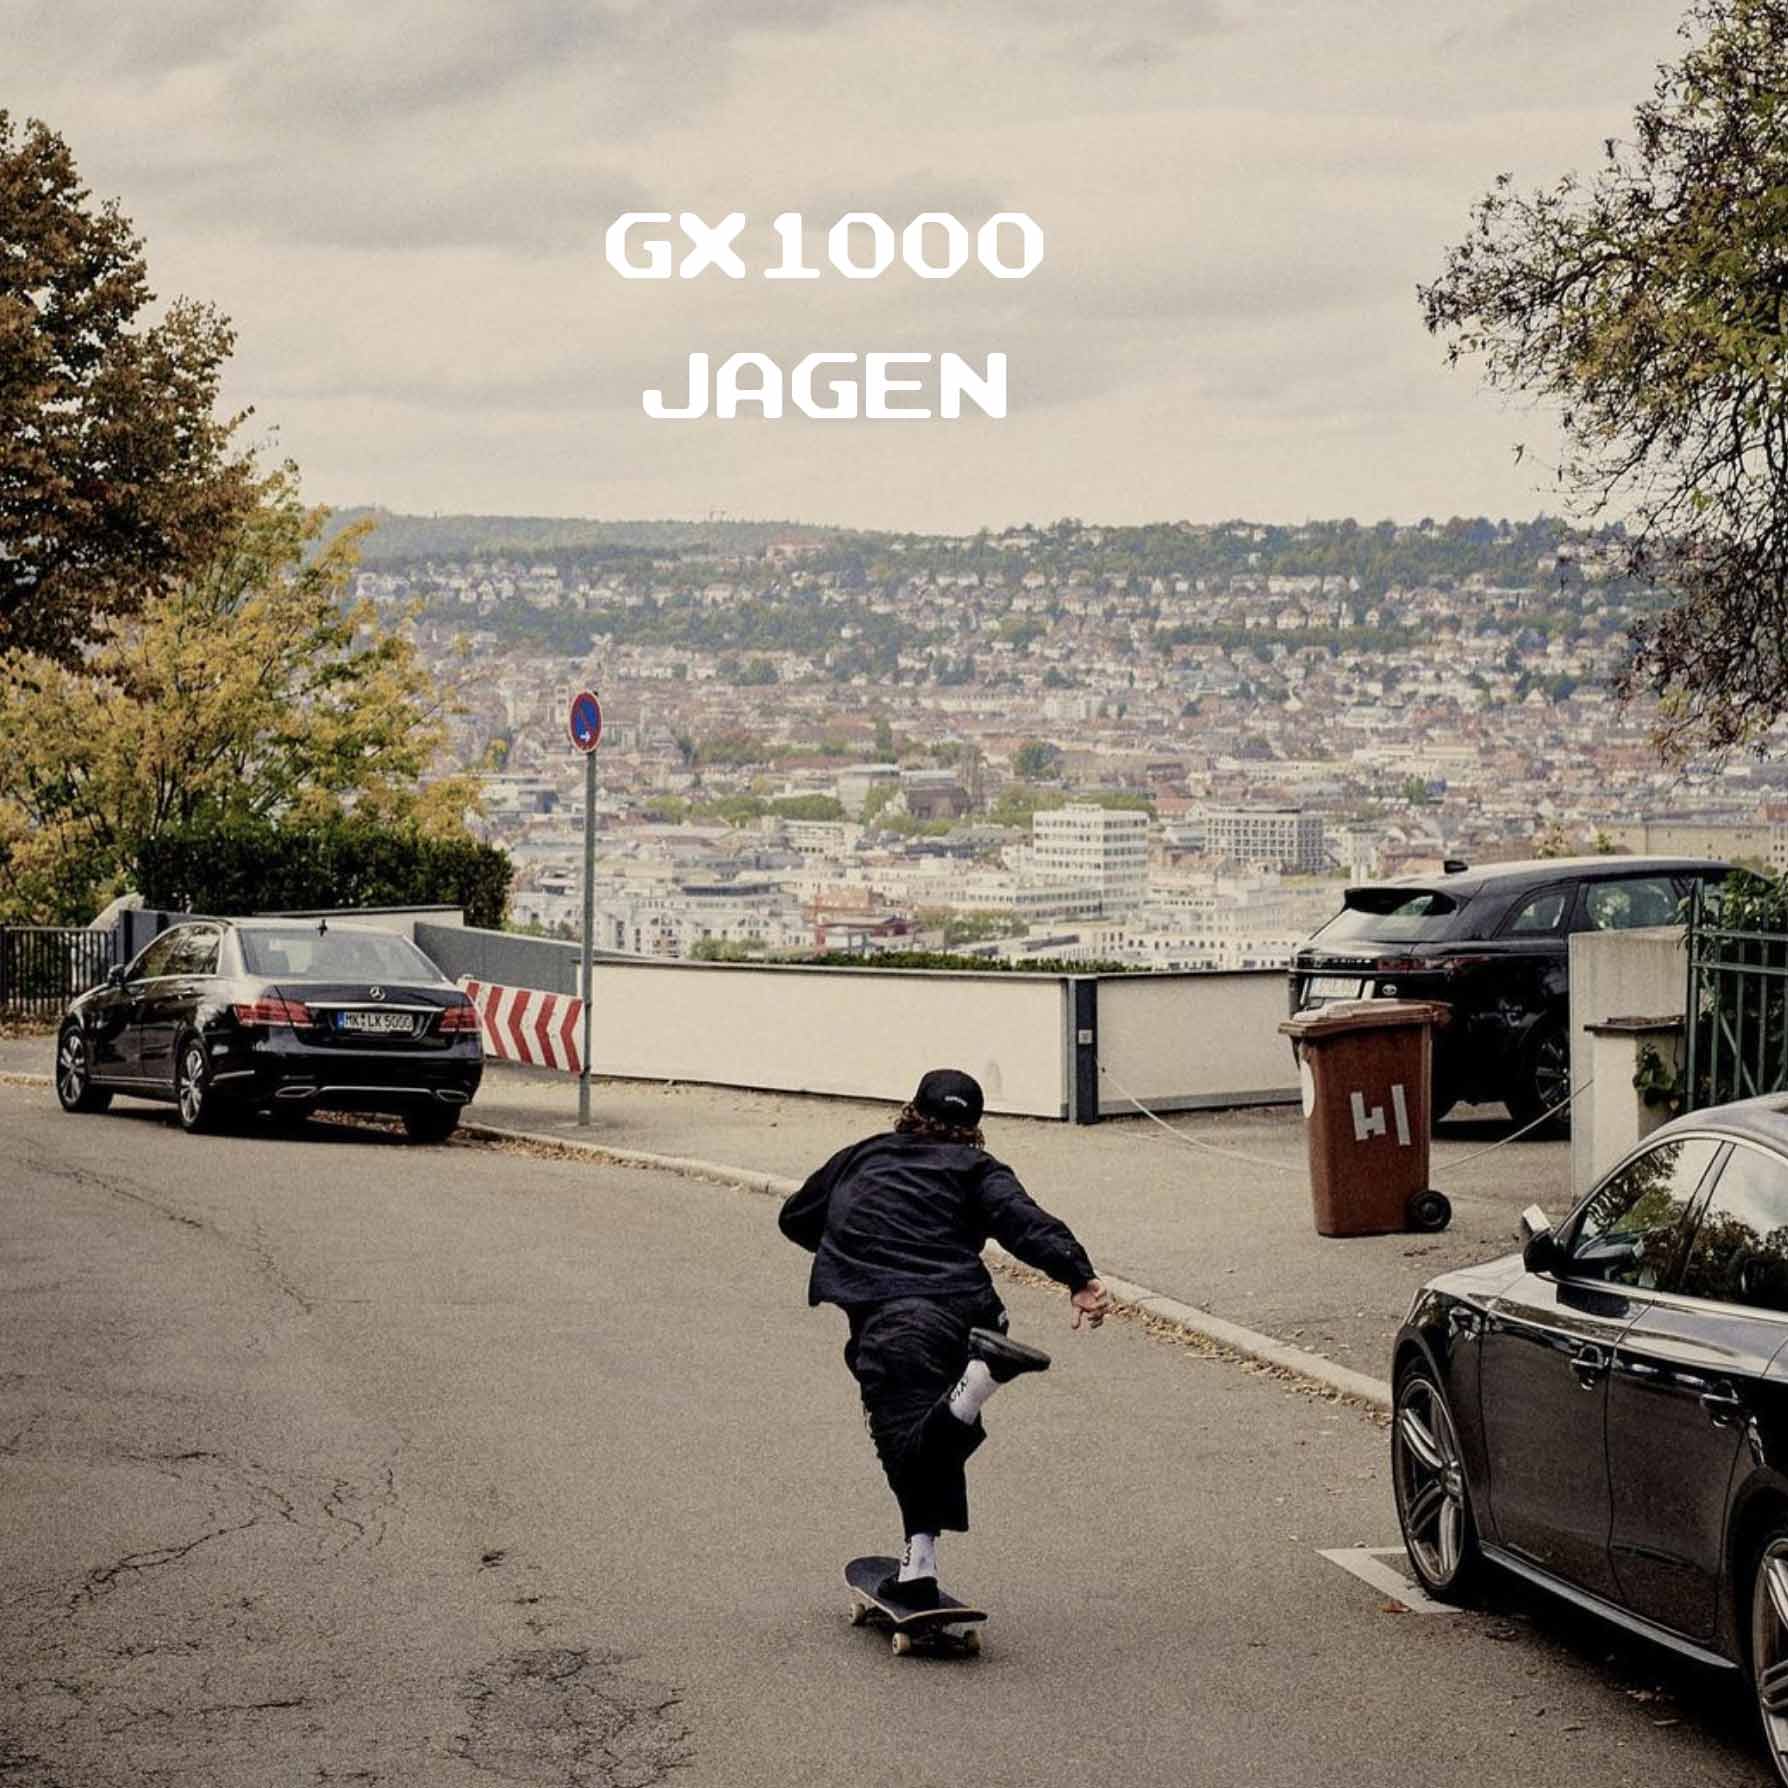 GX1000 "Jagen"